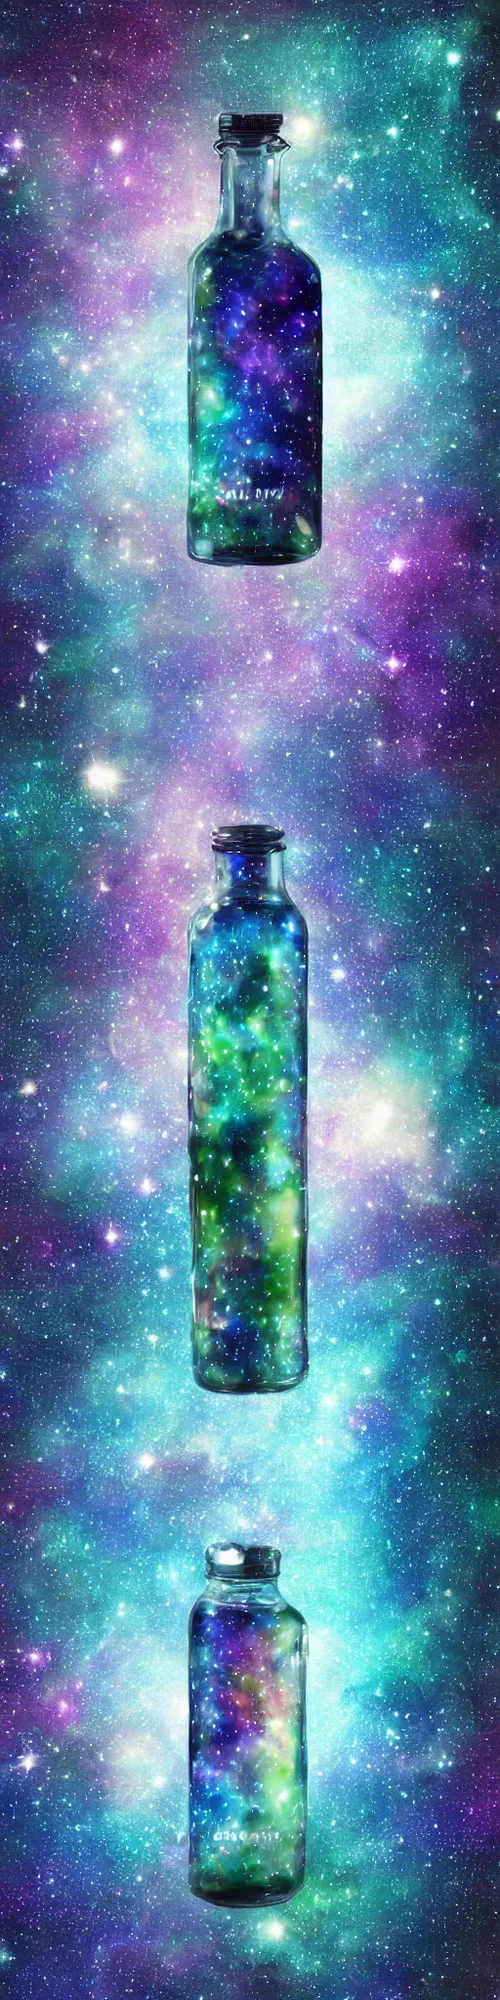 Prompt: Galaxy in a bottle